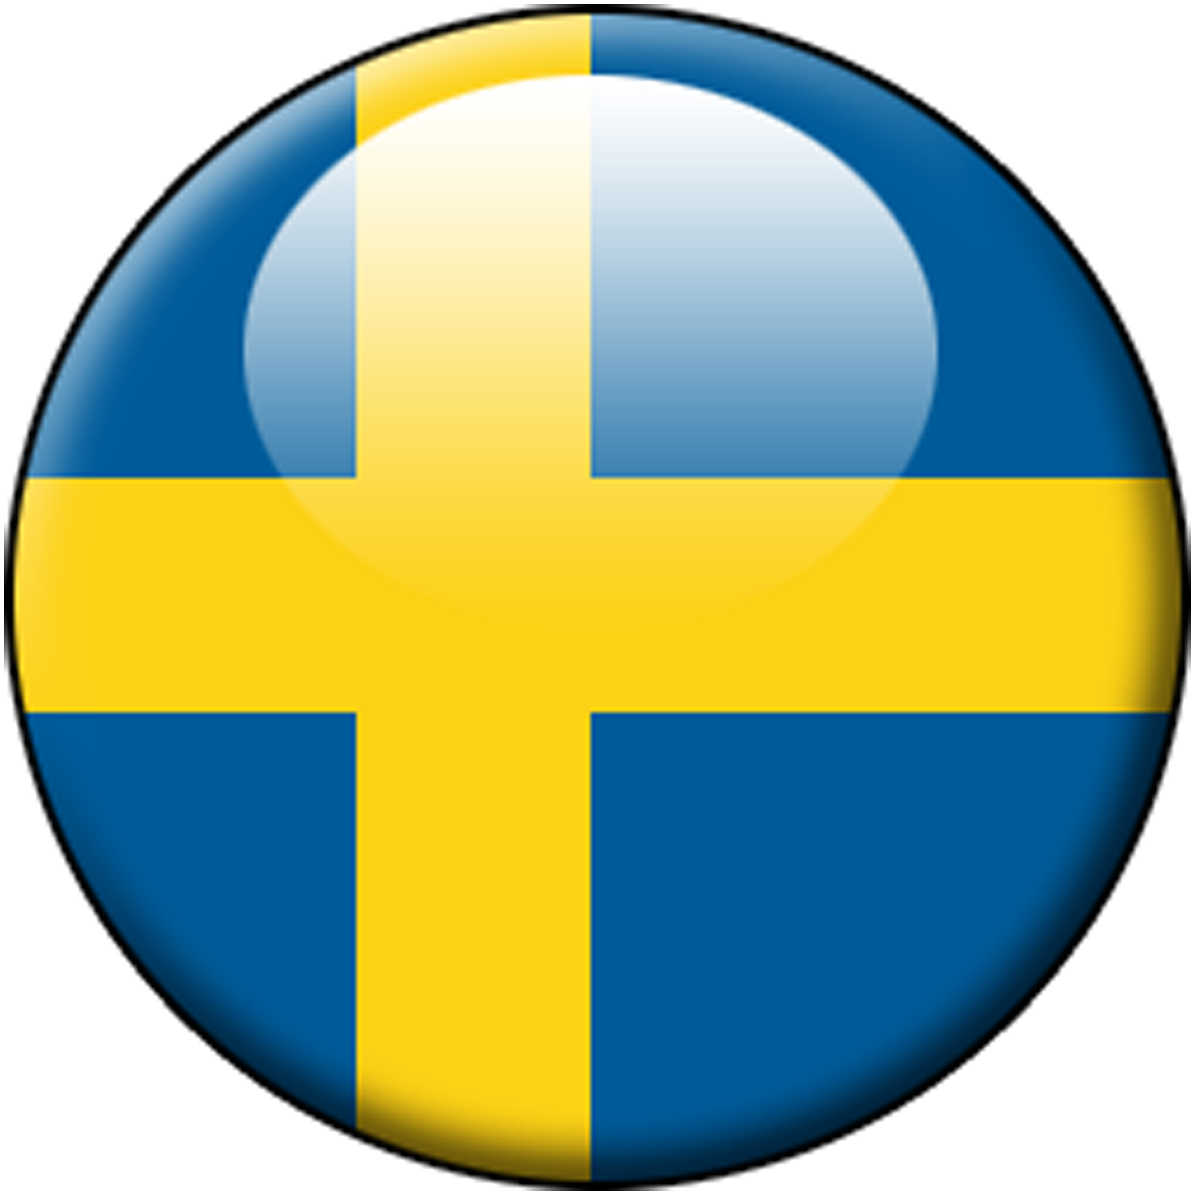 http://1.bp.blogspot.com/-7ZL_t0bzL_U/TdIUffSiR-I/AAAAAAAABDA/6WSXxcjMgKM/s1600/Wallpapers+Flag+of+Sweden+Flag+Swedesh+Flag+Graphics+%25286%2529.png